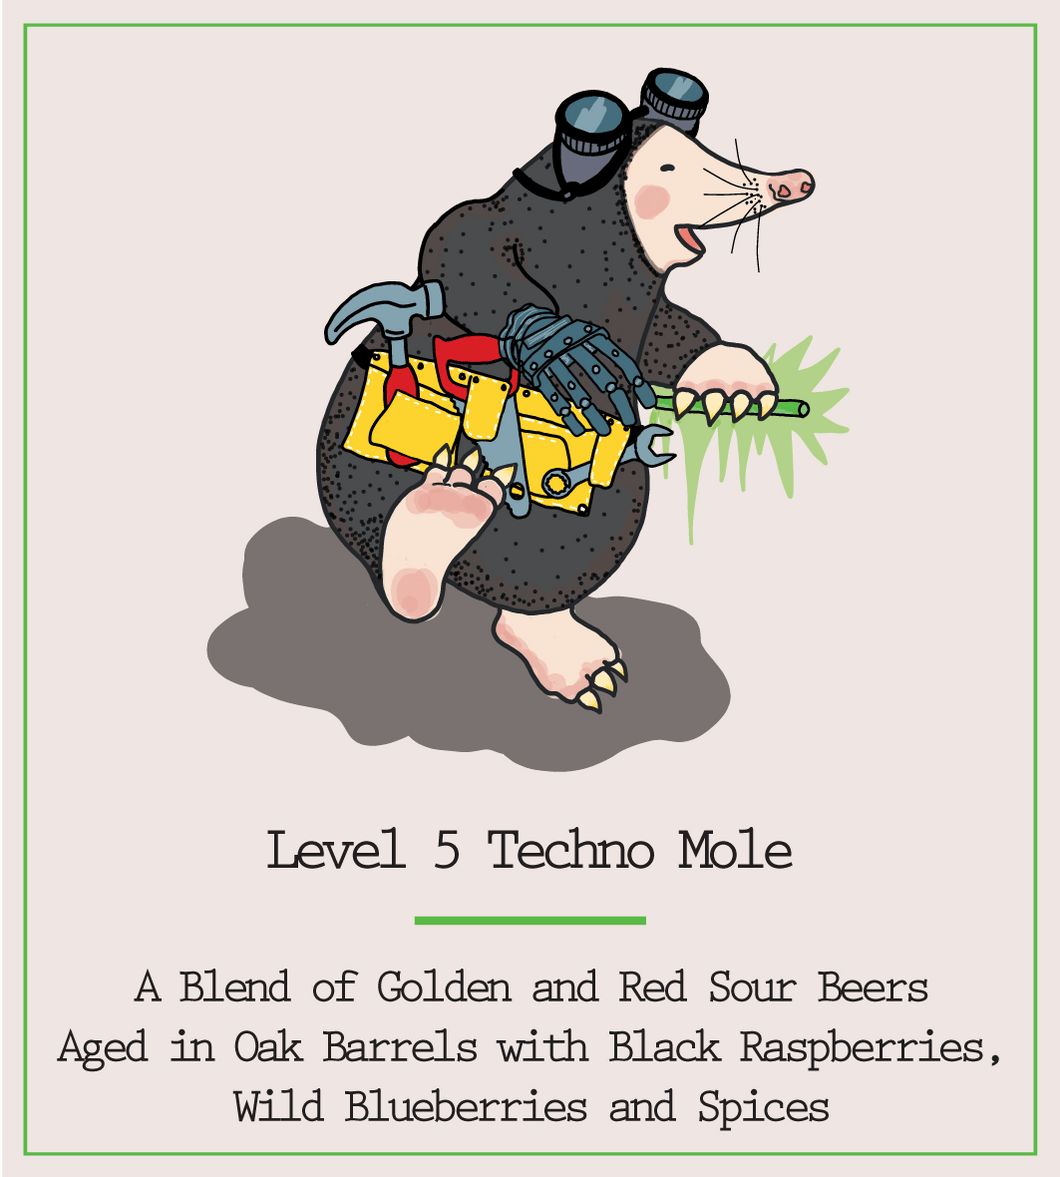 Level 5 Techno Mole 2020 Free Club Bottle